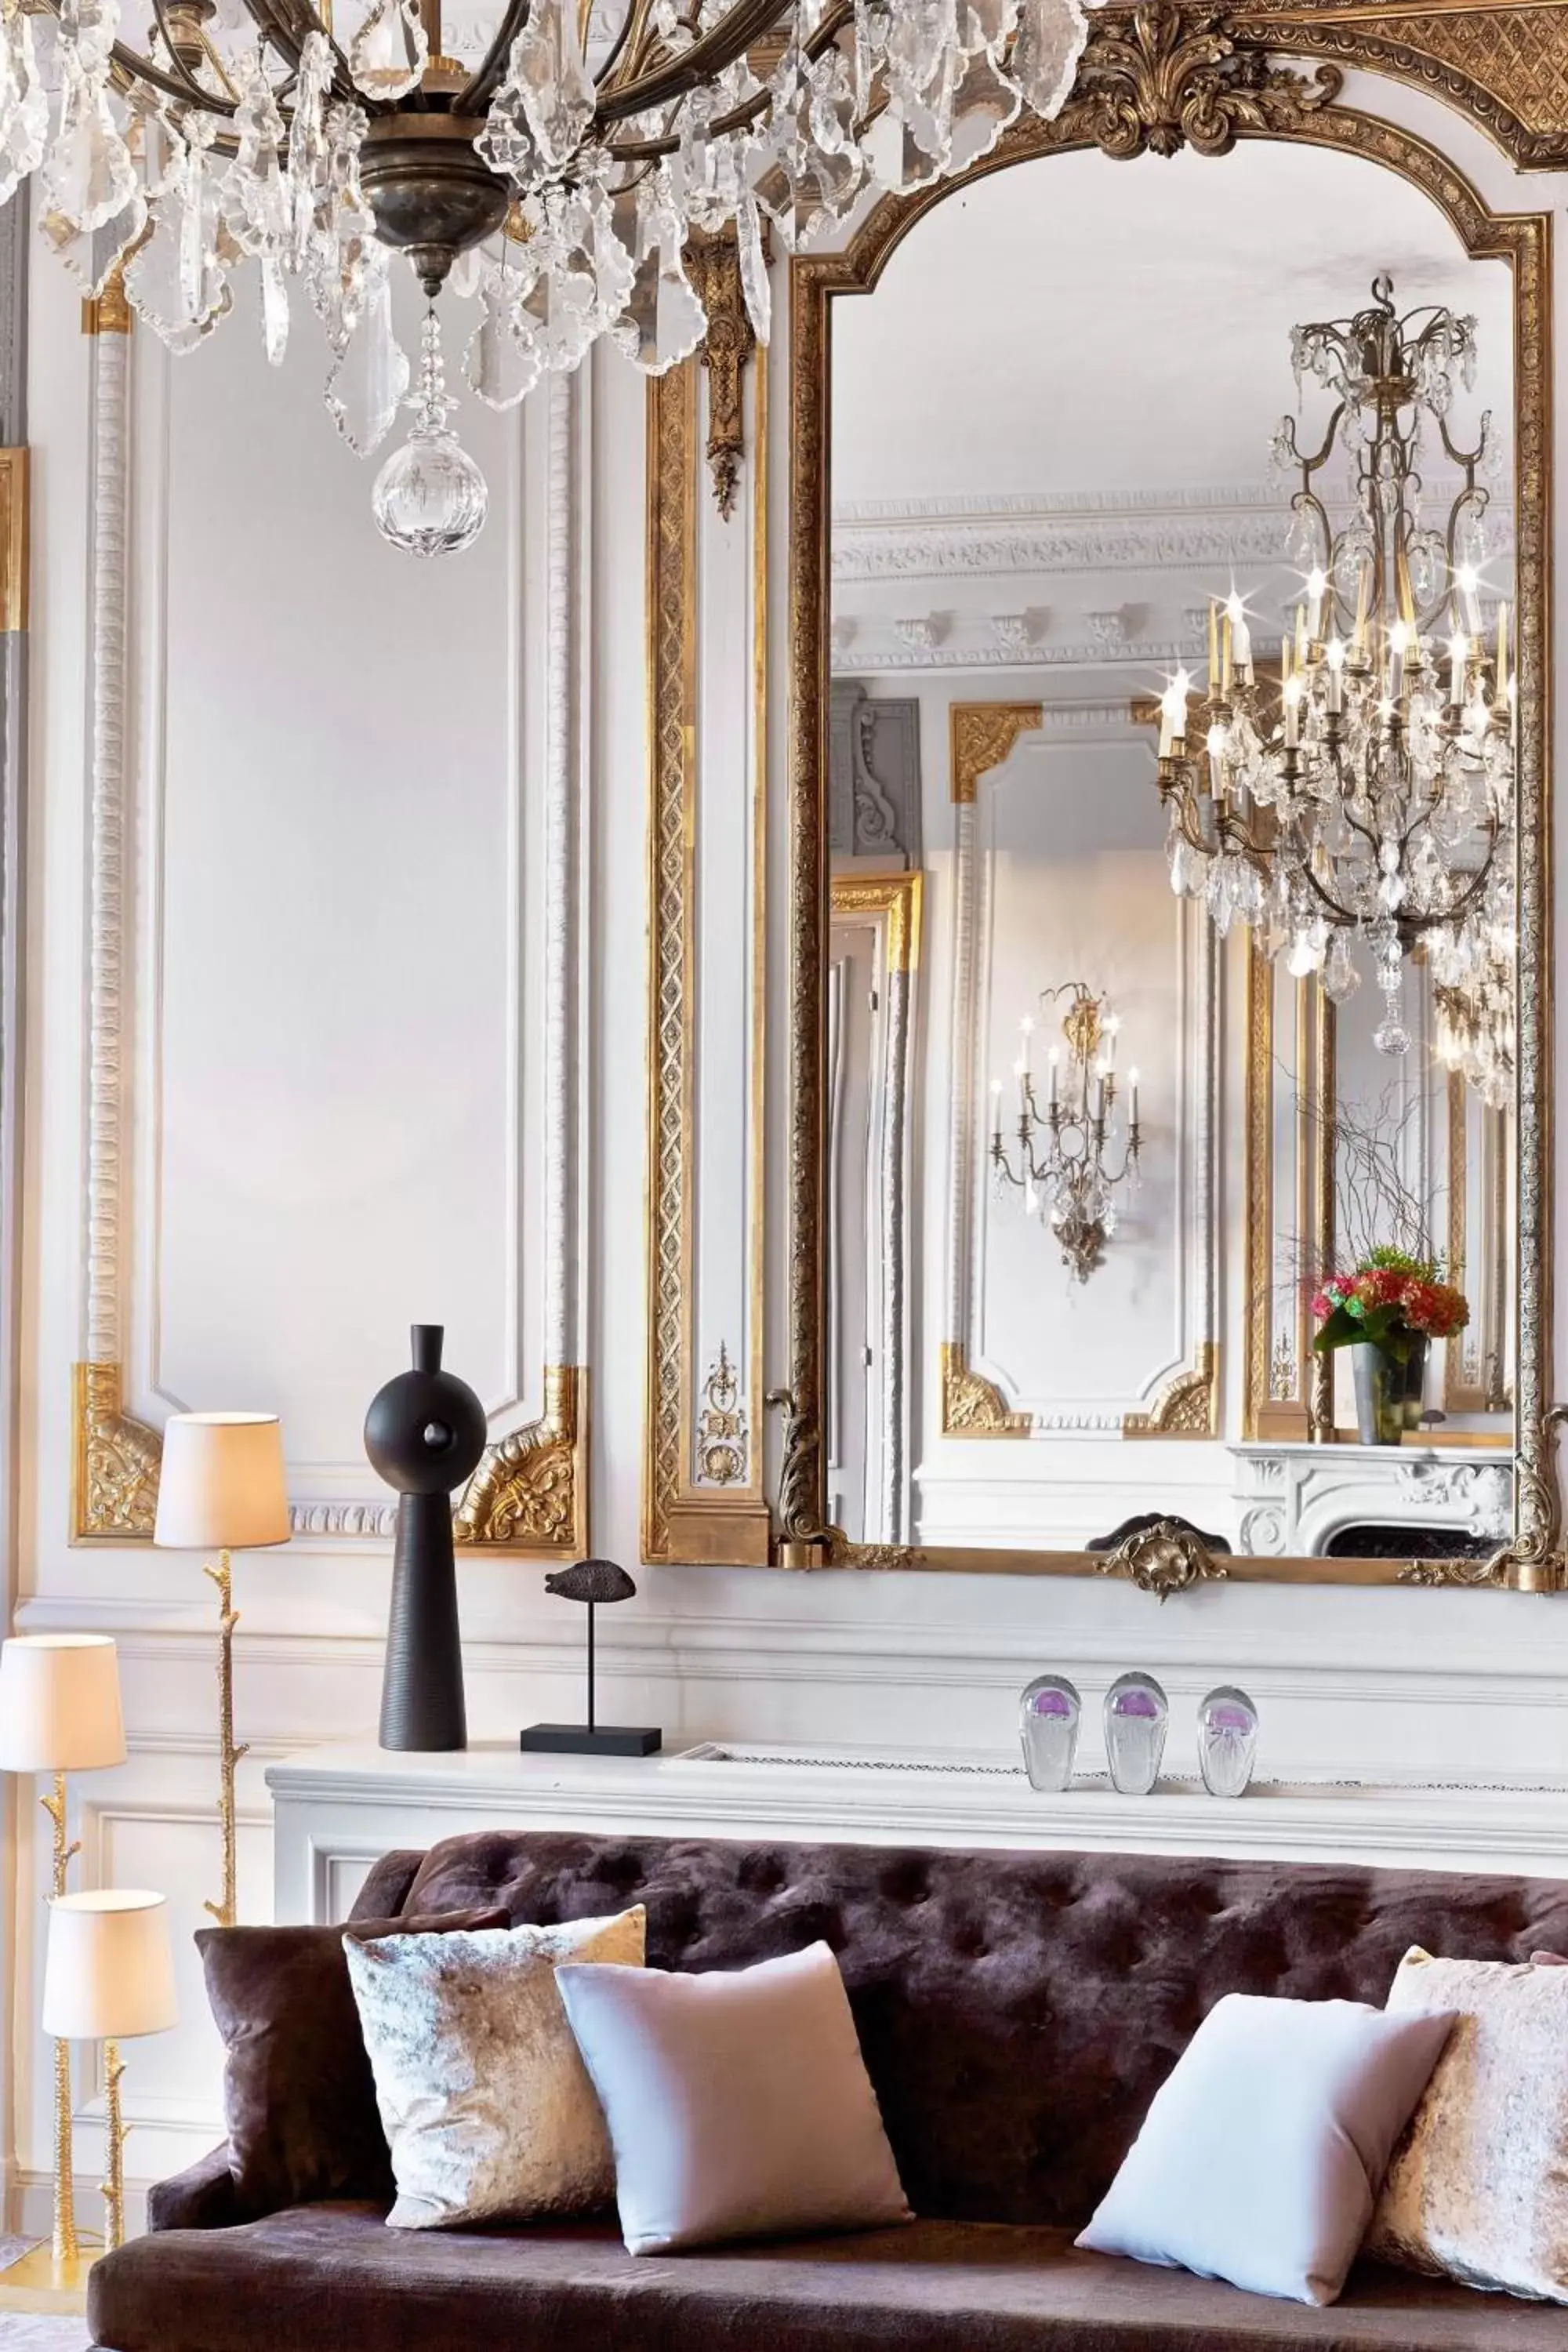 Photo of the whole room in The Westin Paris - Vendôme